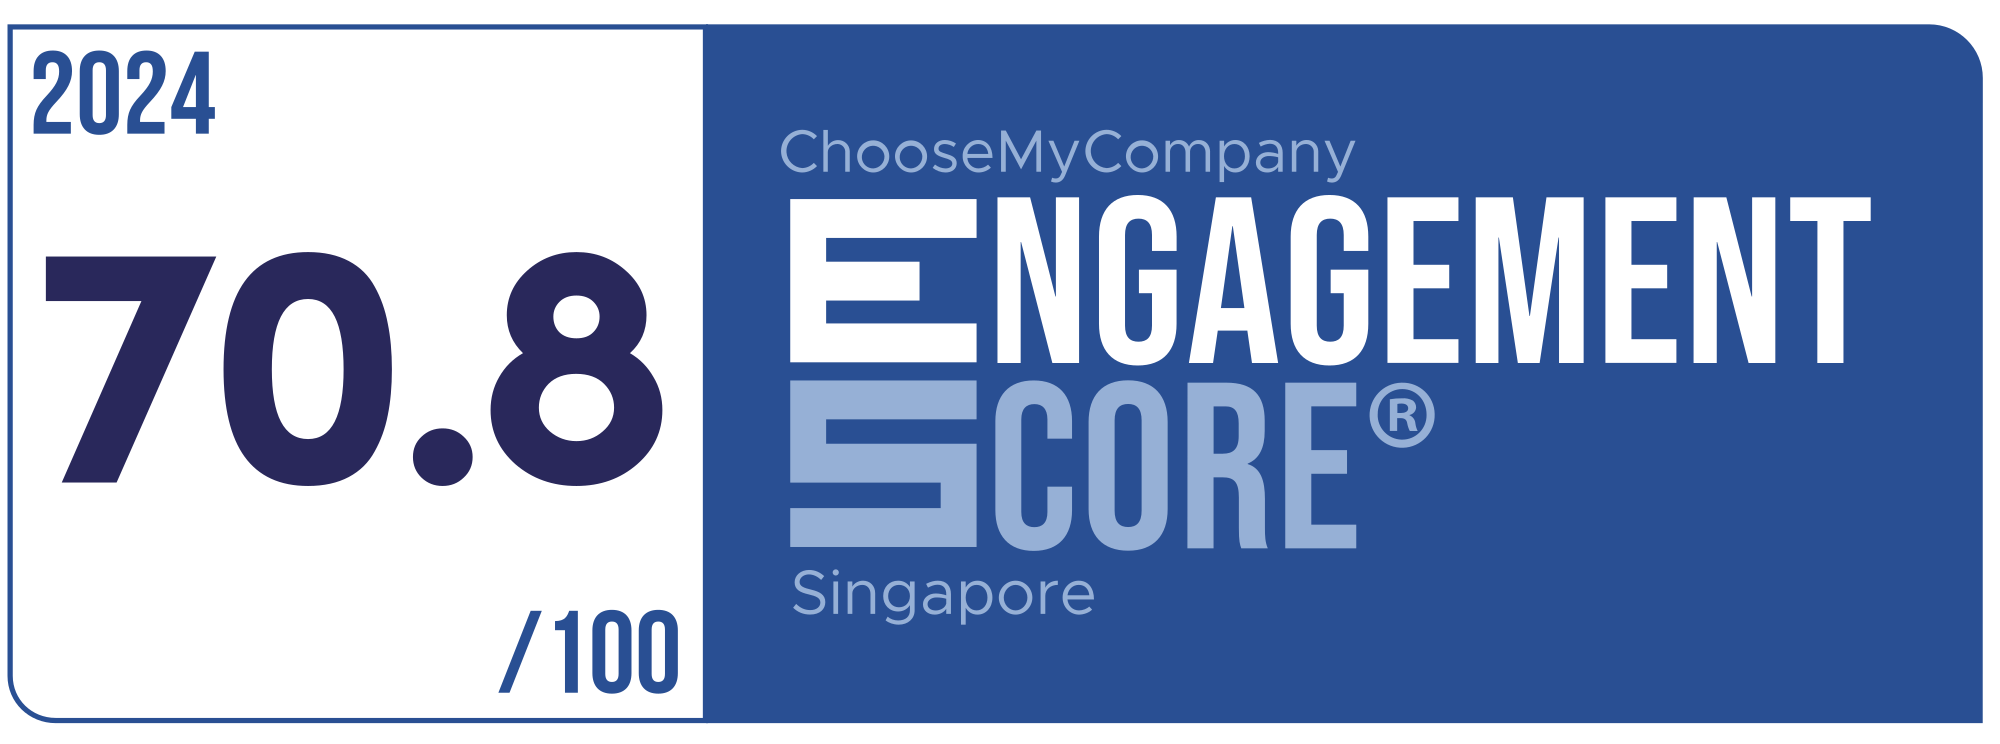 Label Engagement Score 2024 Singapore